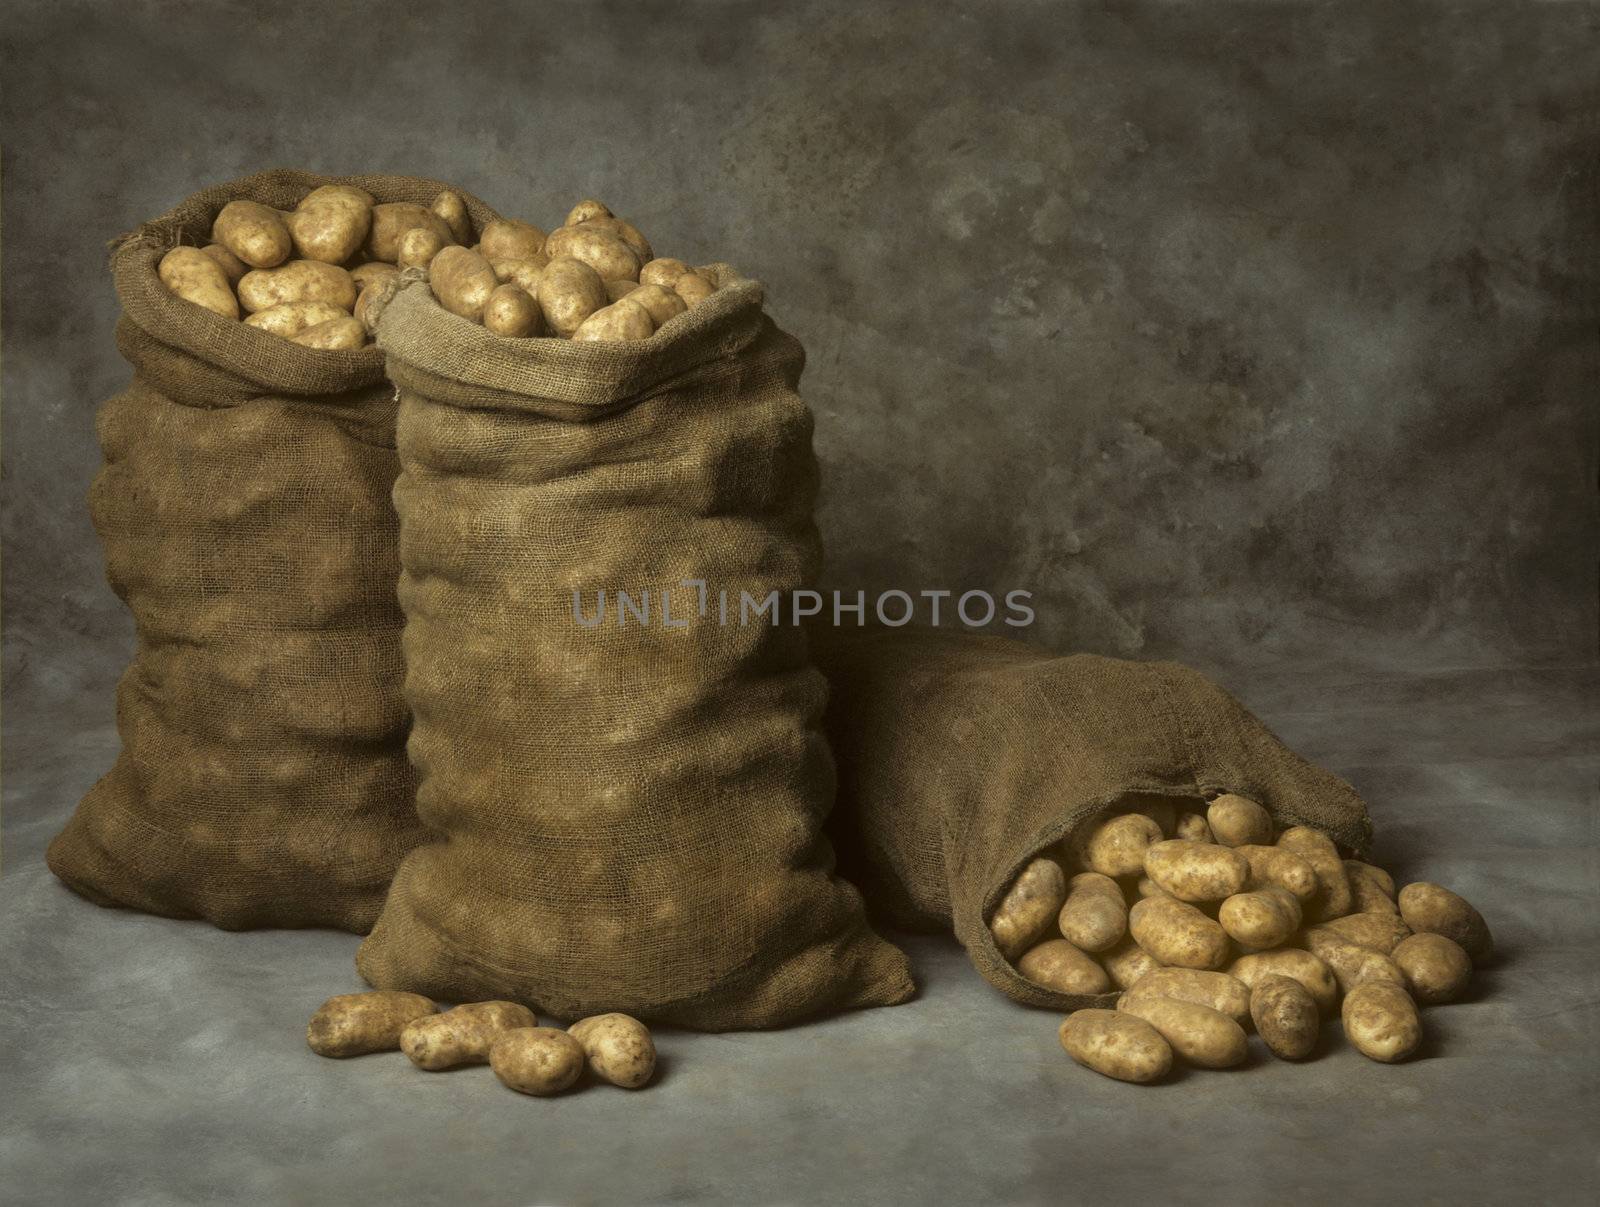 Burlap Sacks of Potatoes by Balefire9